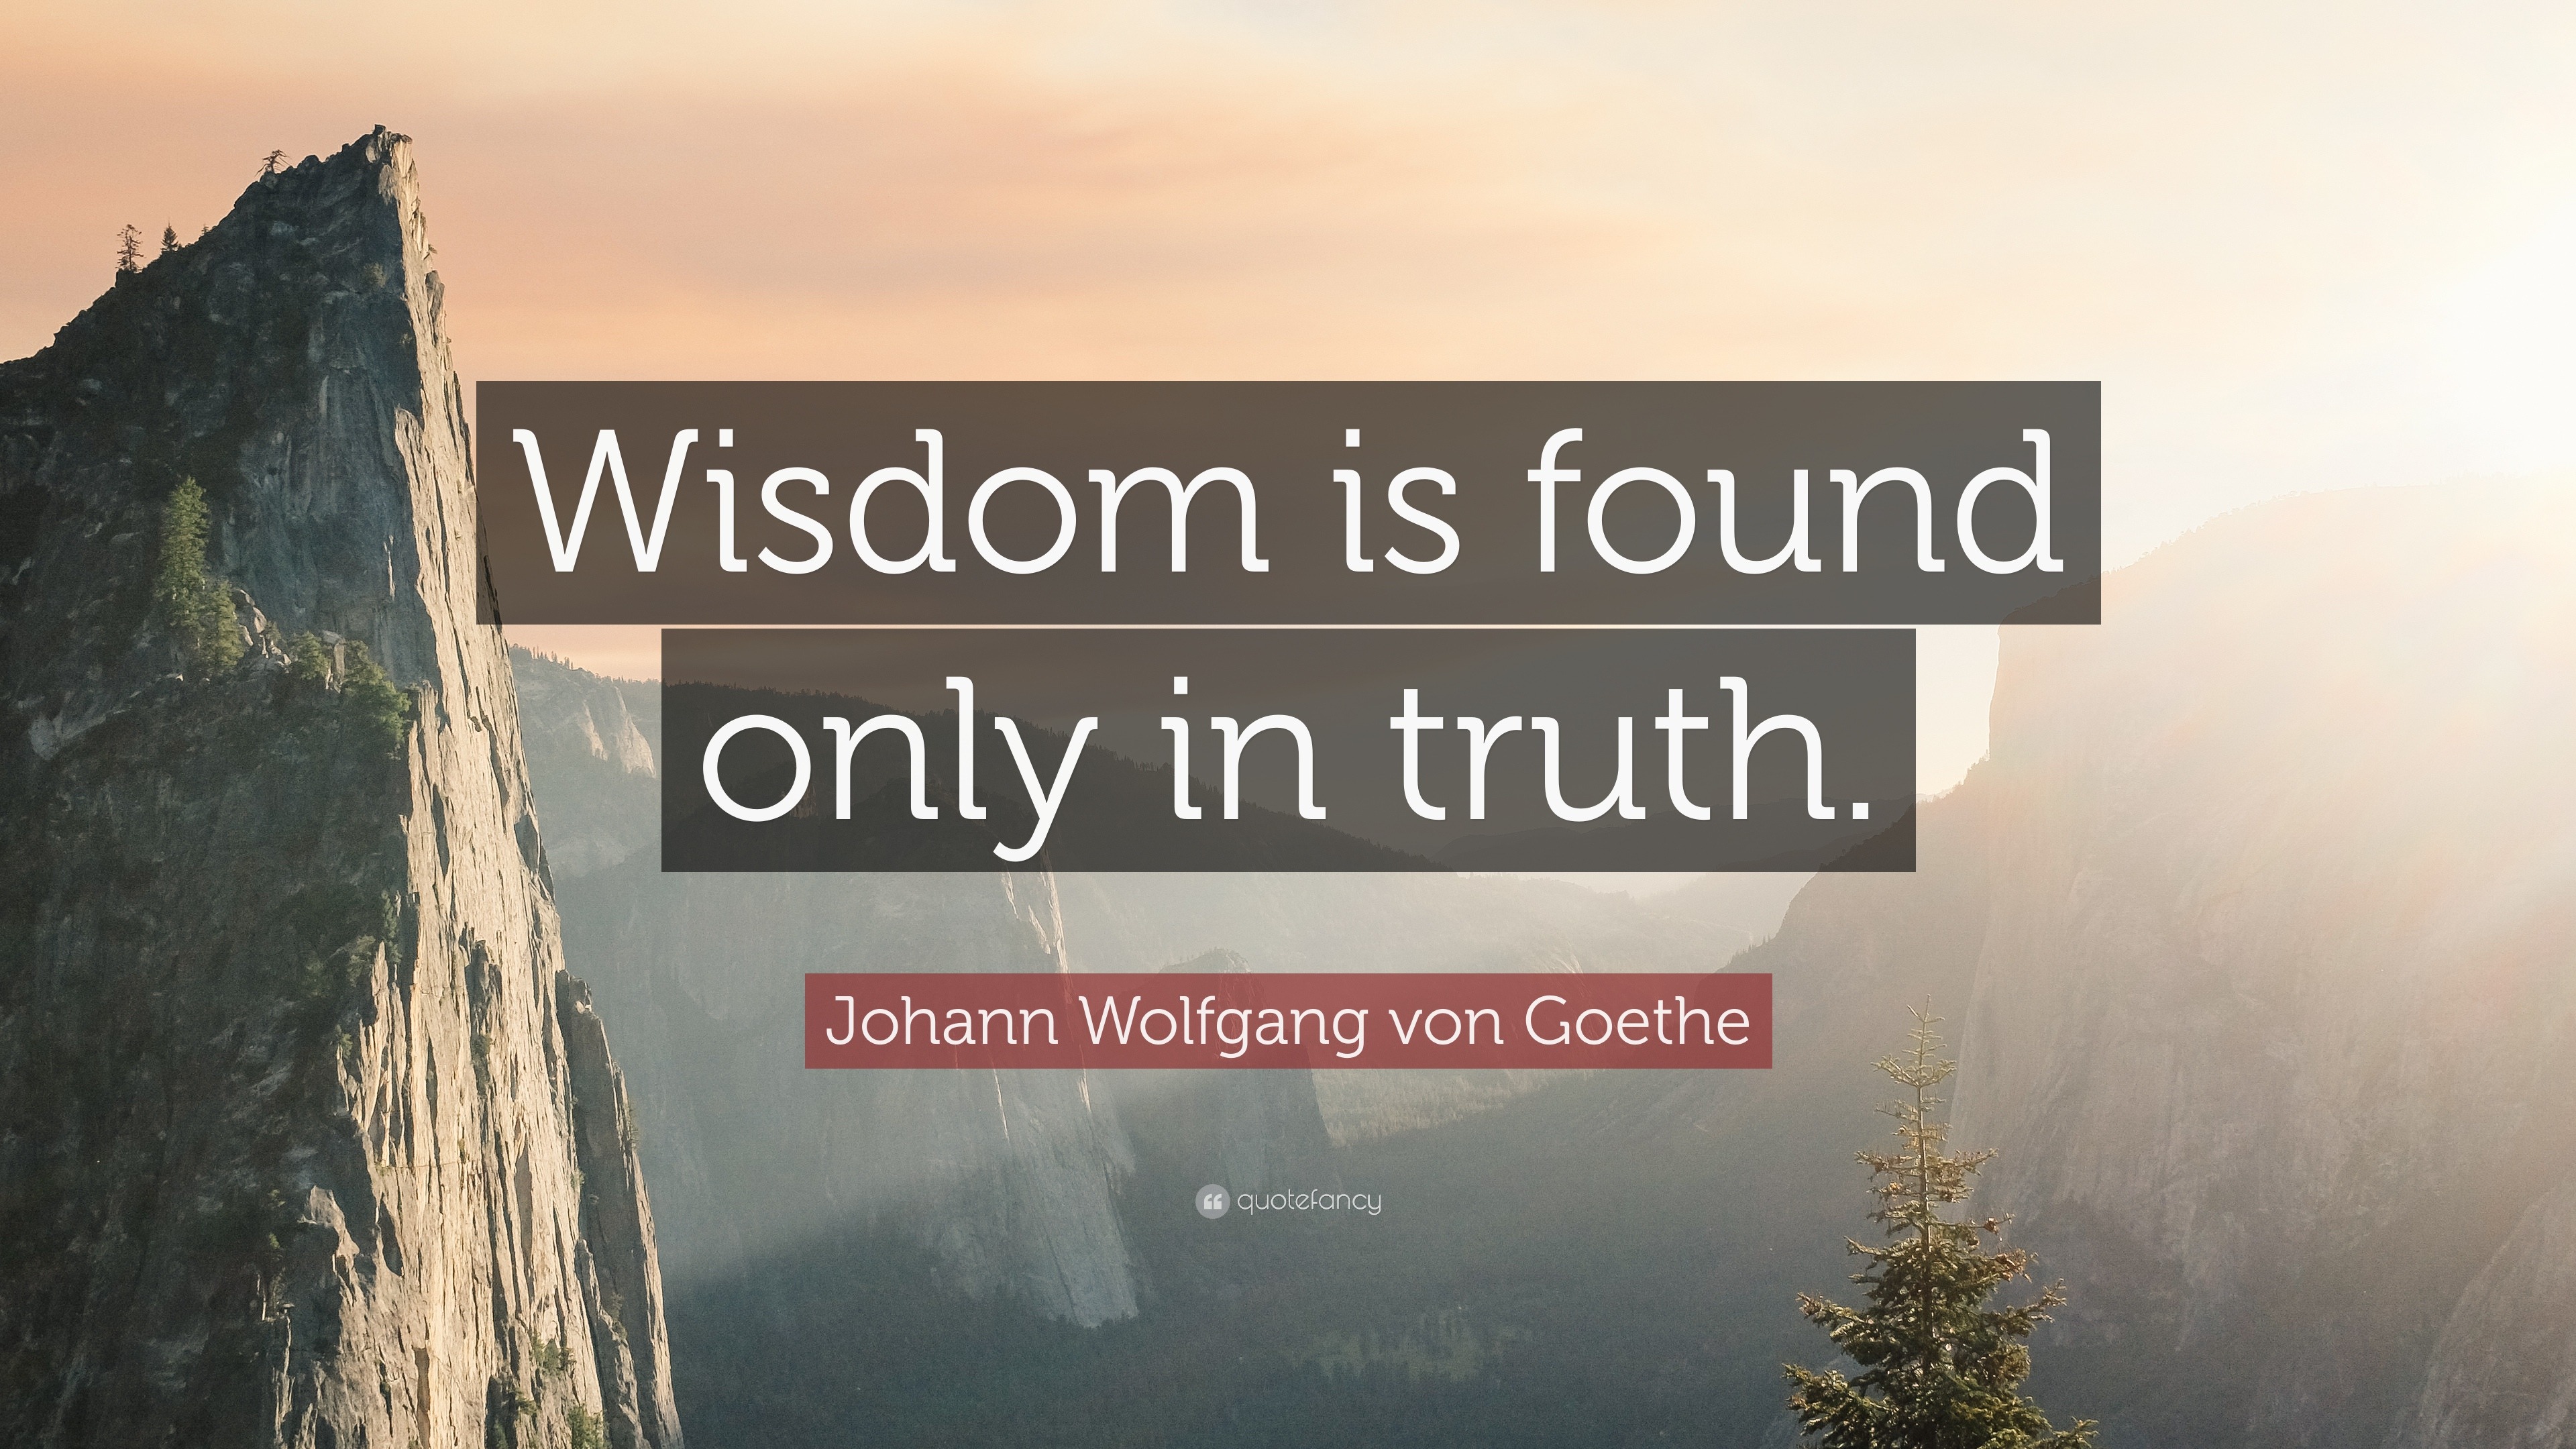 Johann Wolfgang von Goethe Quote: “Wisdom is found only in truth.”